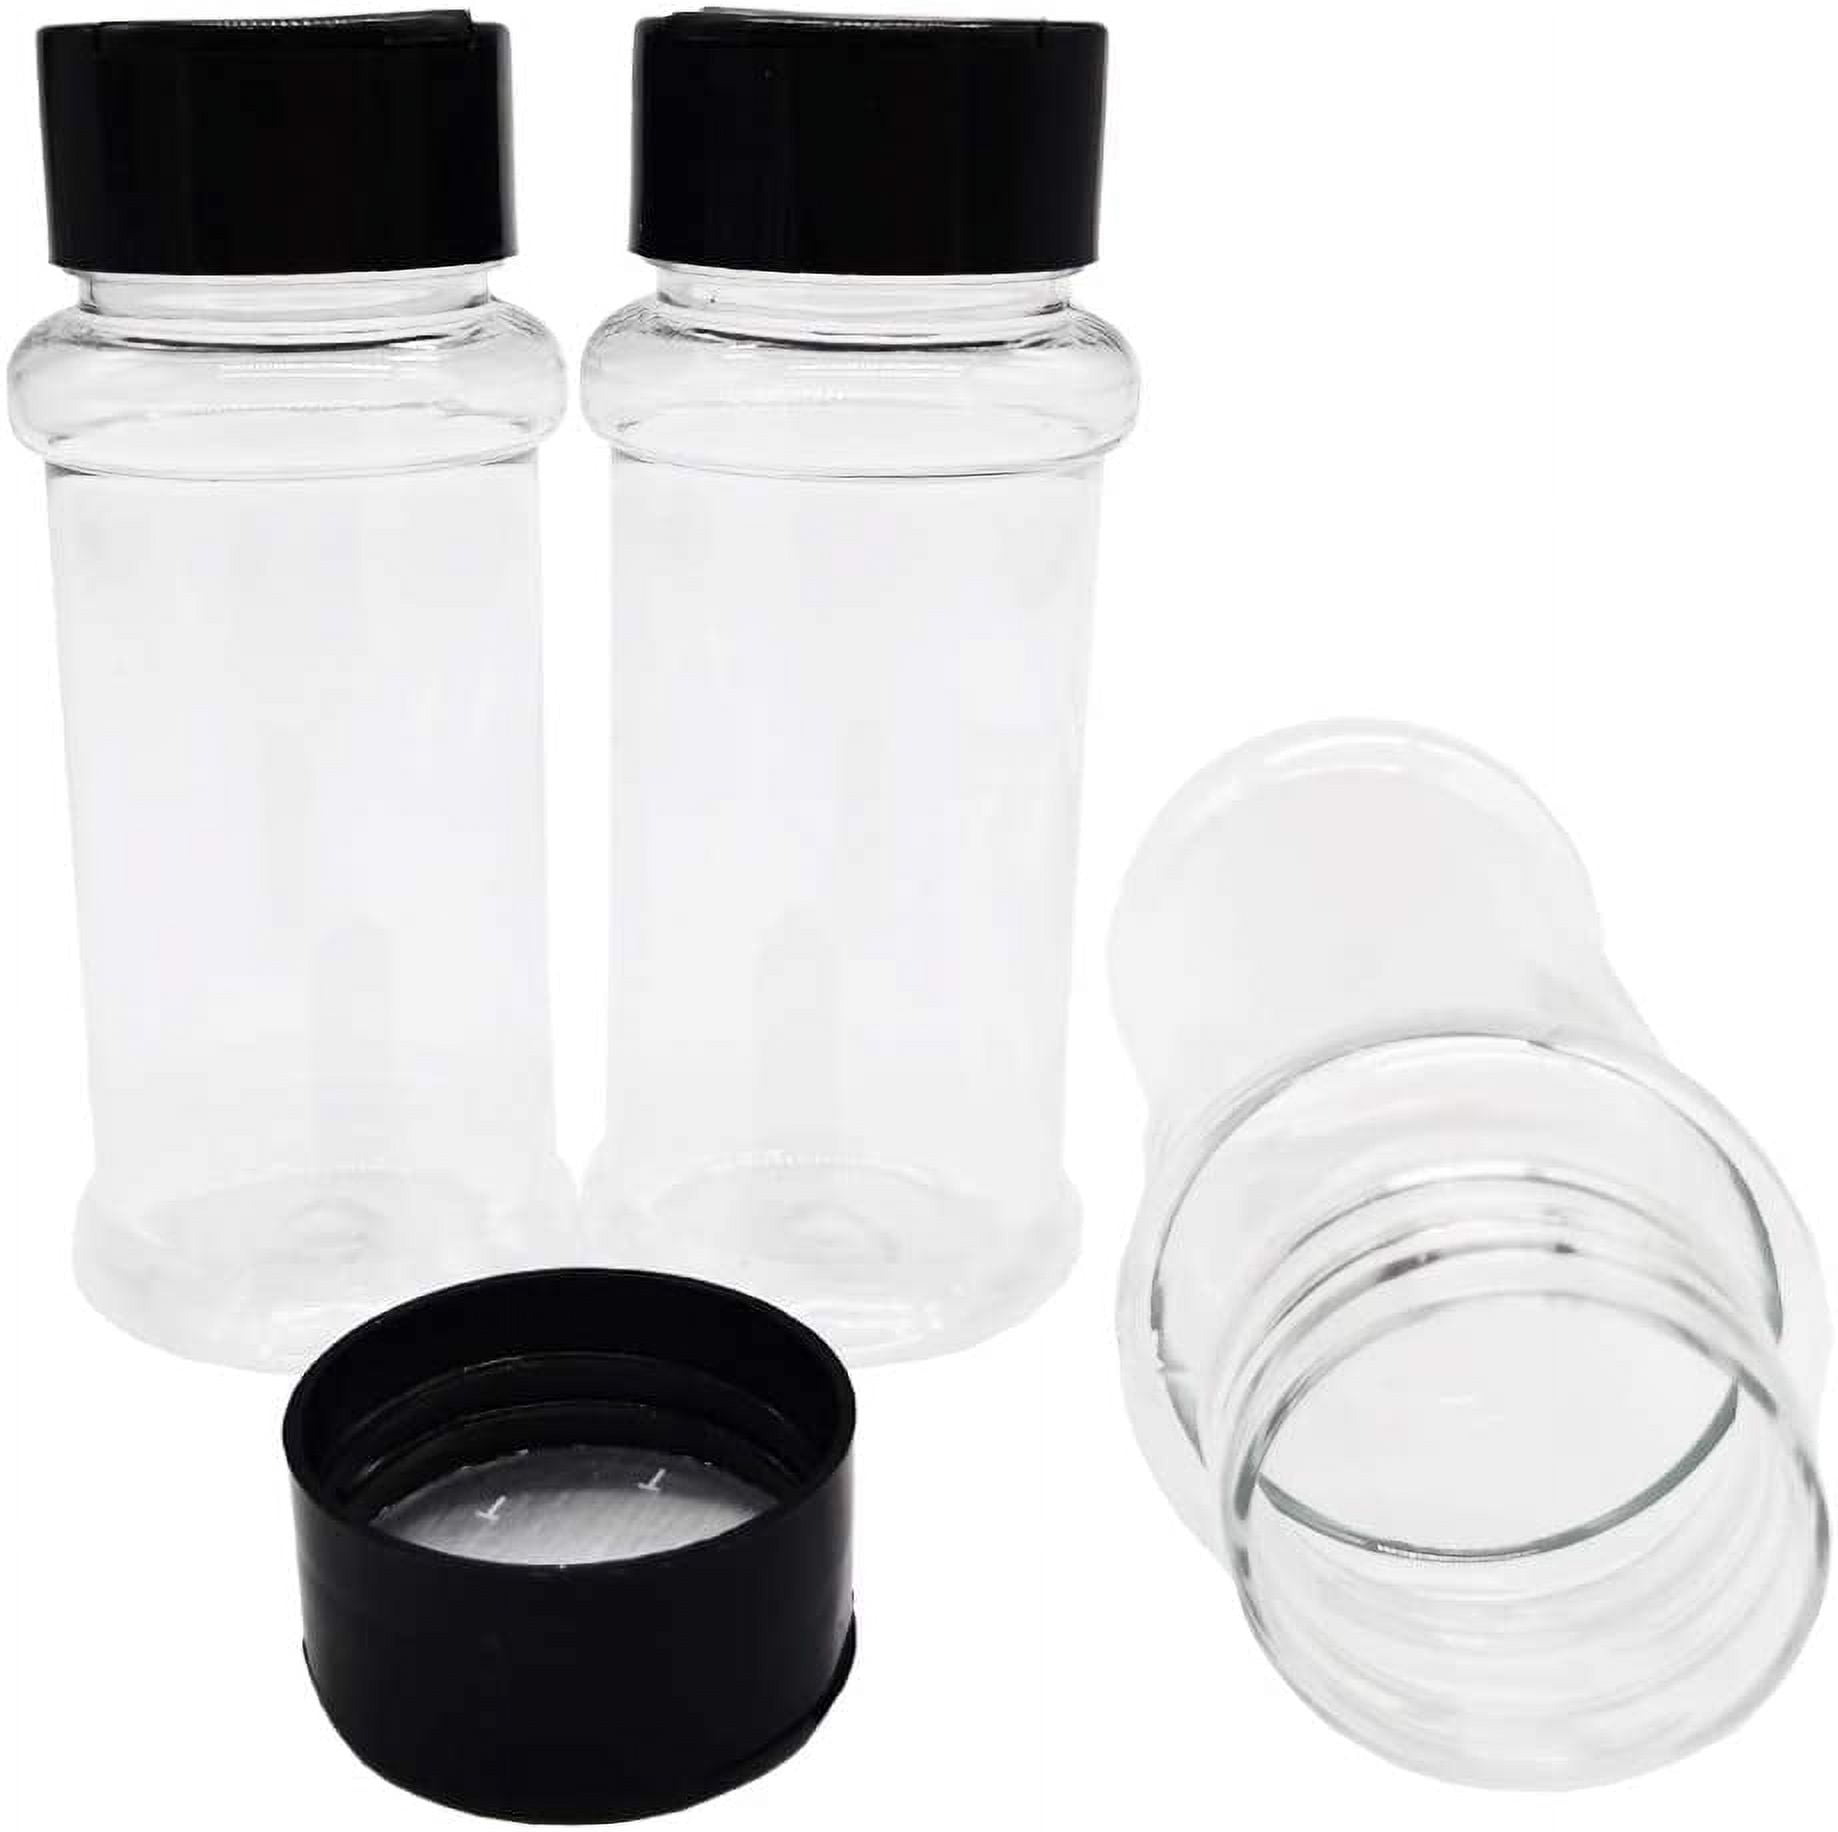 Tianifa 6pcs Black Spice Jars, 3 oz Glass Seasoning Bottles